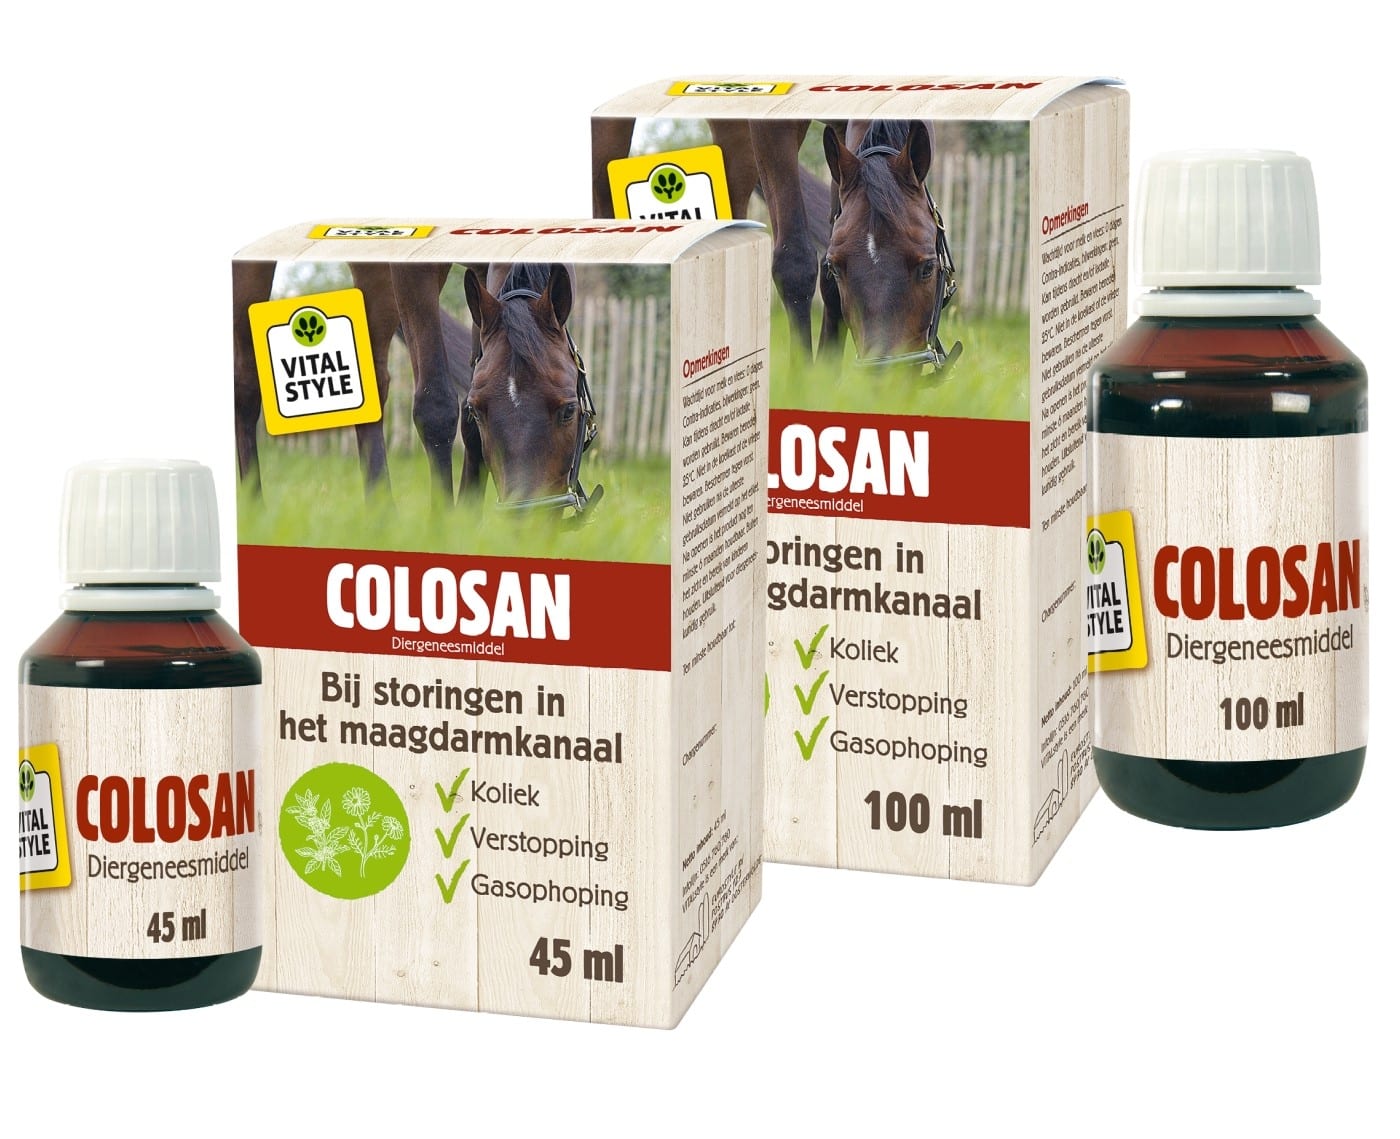 VITALstyle Colosan-1